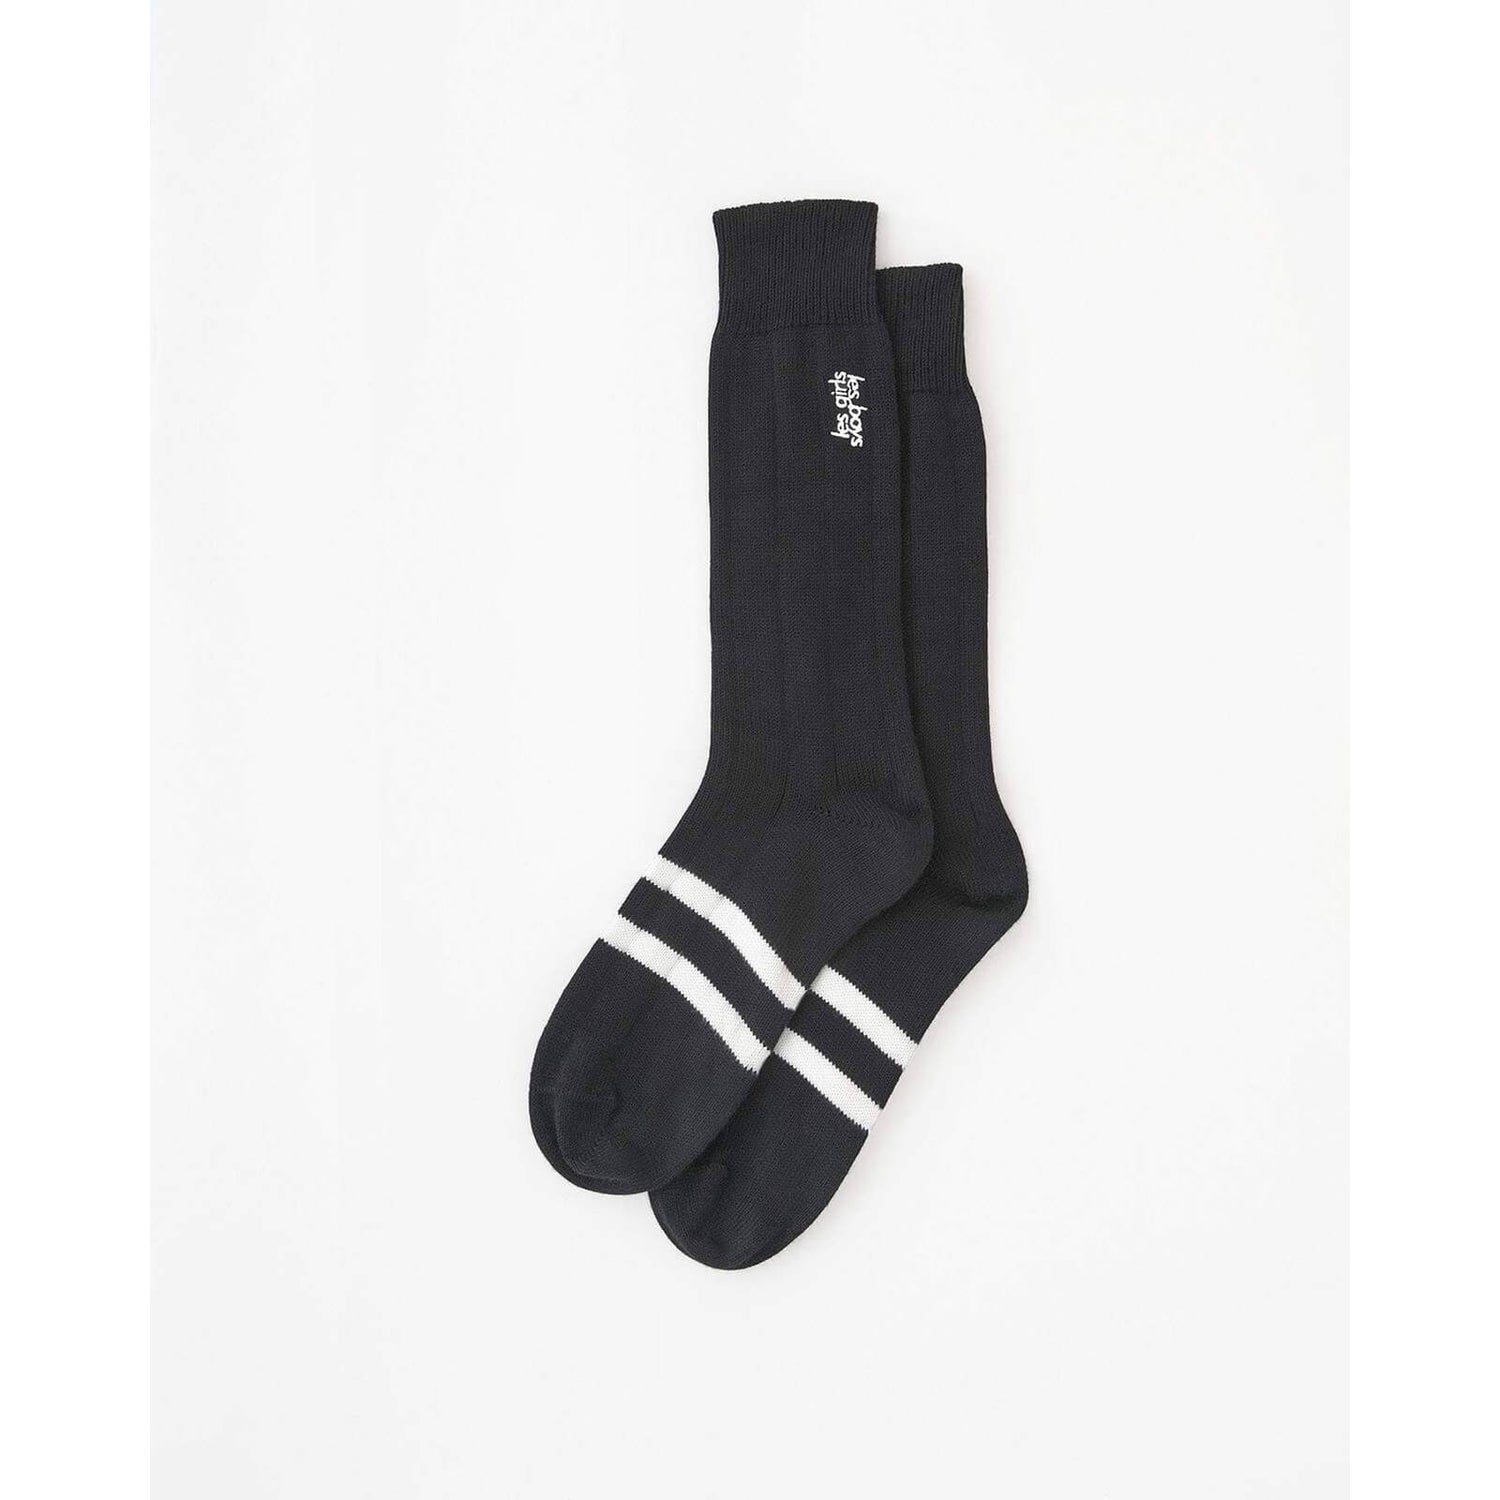 Les Girls Les Boys Women's Embroidered Cotton Mid Calf Socks - Black